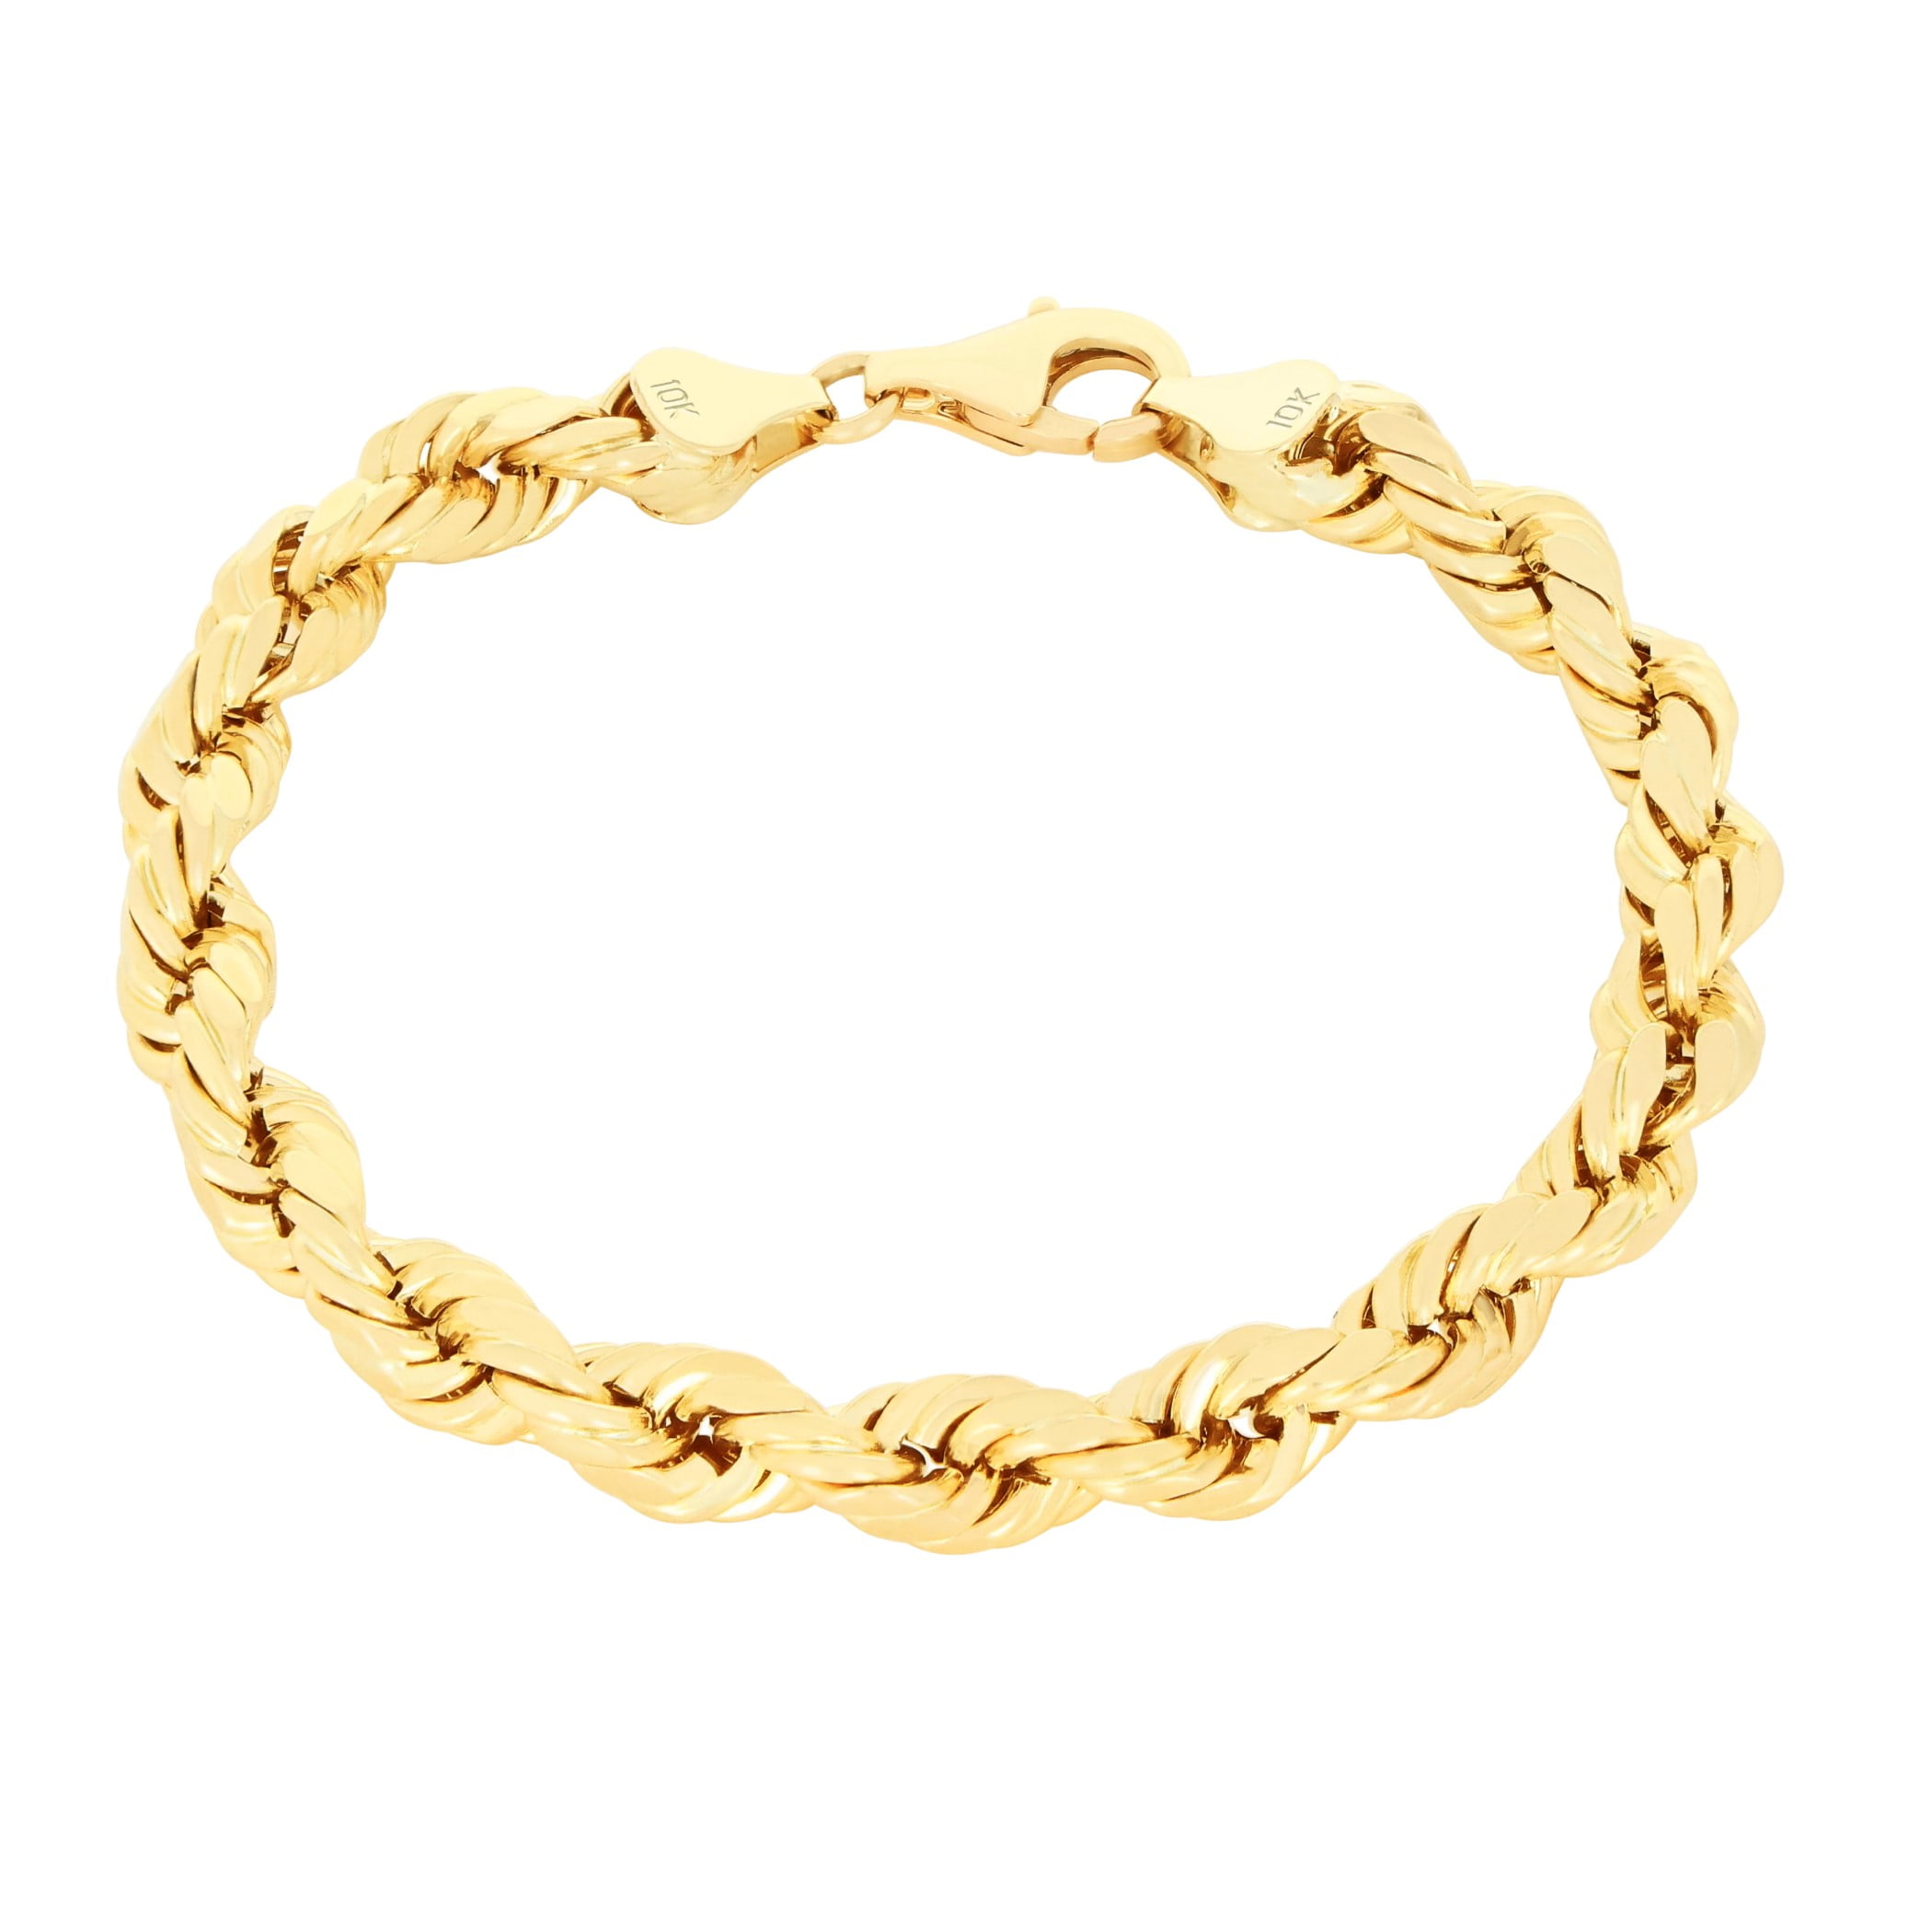 Nuragold 10k Yellow Gold 7mm Rope Chain Diamond Cut Bracelet, Mens Womens  Jewelry 7 7.5 8 8.5 9